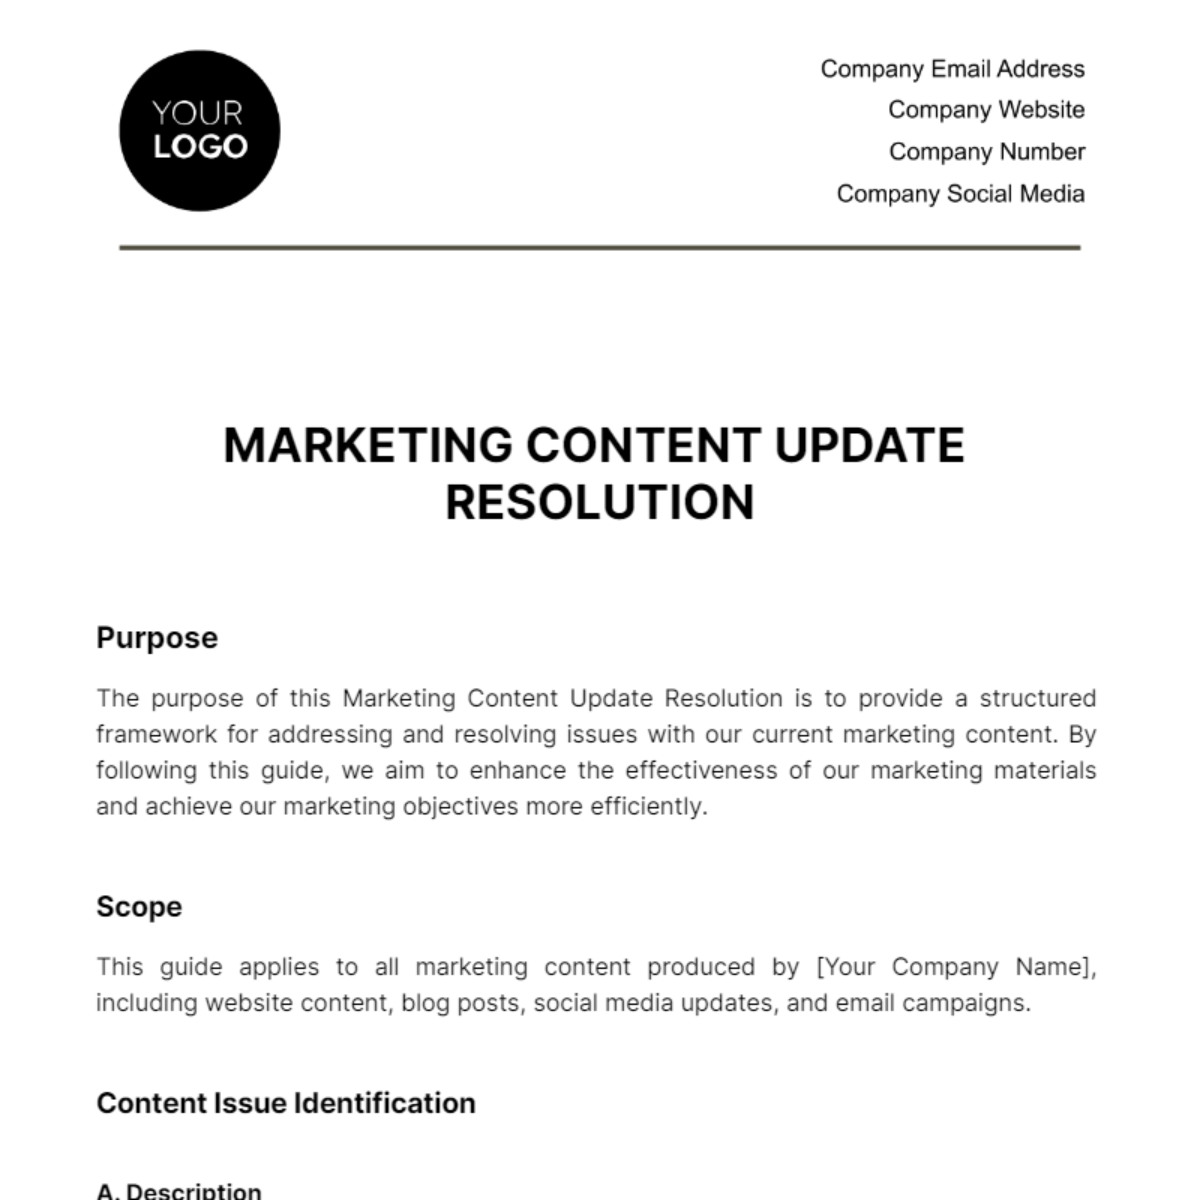 Marketing Content Update Resolution Template